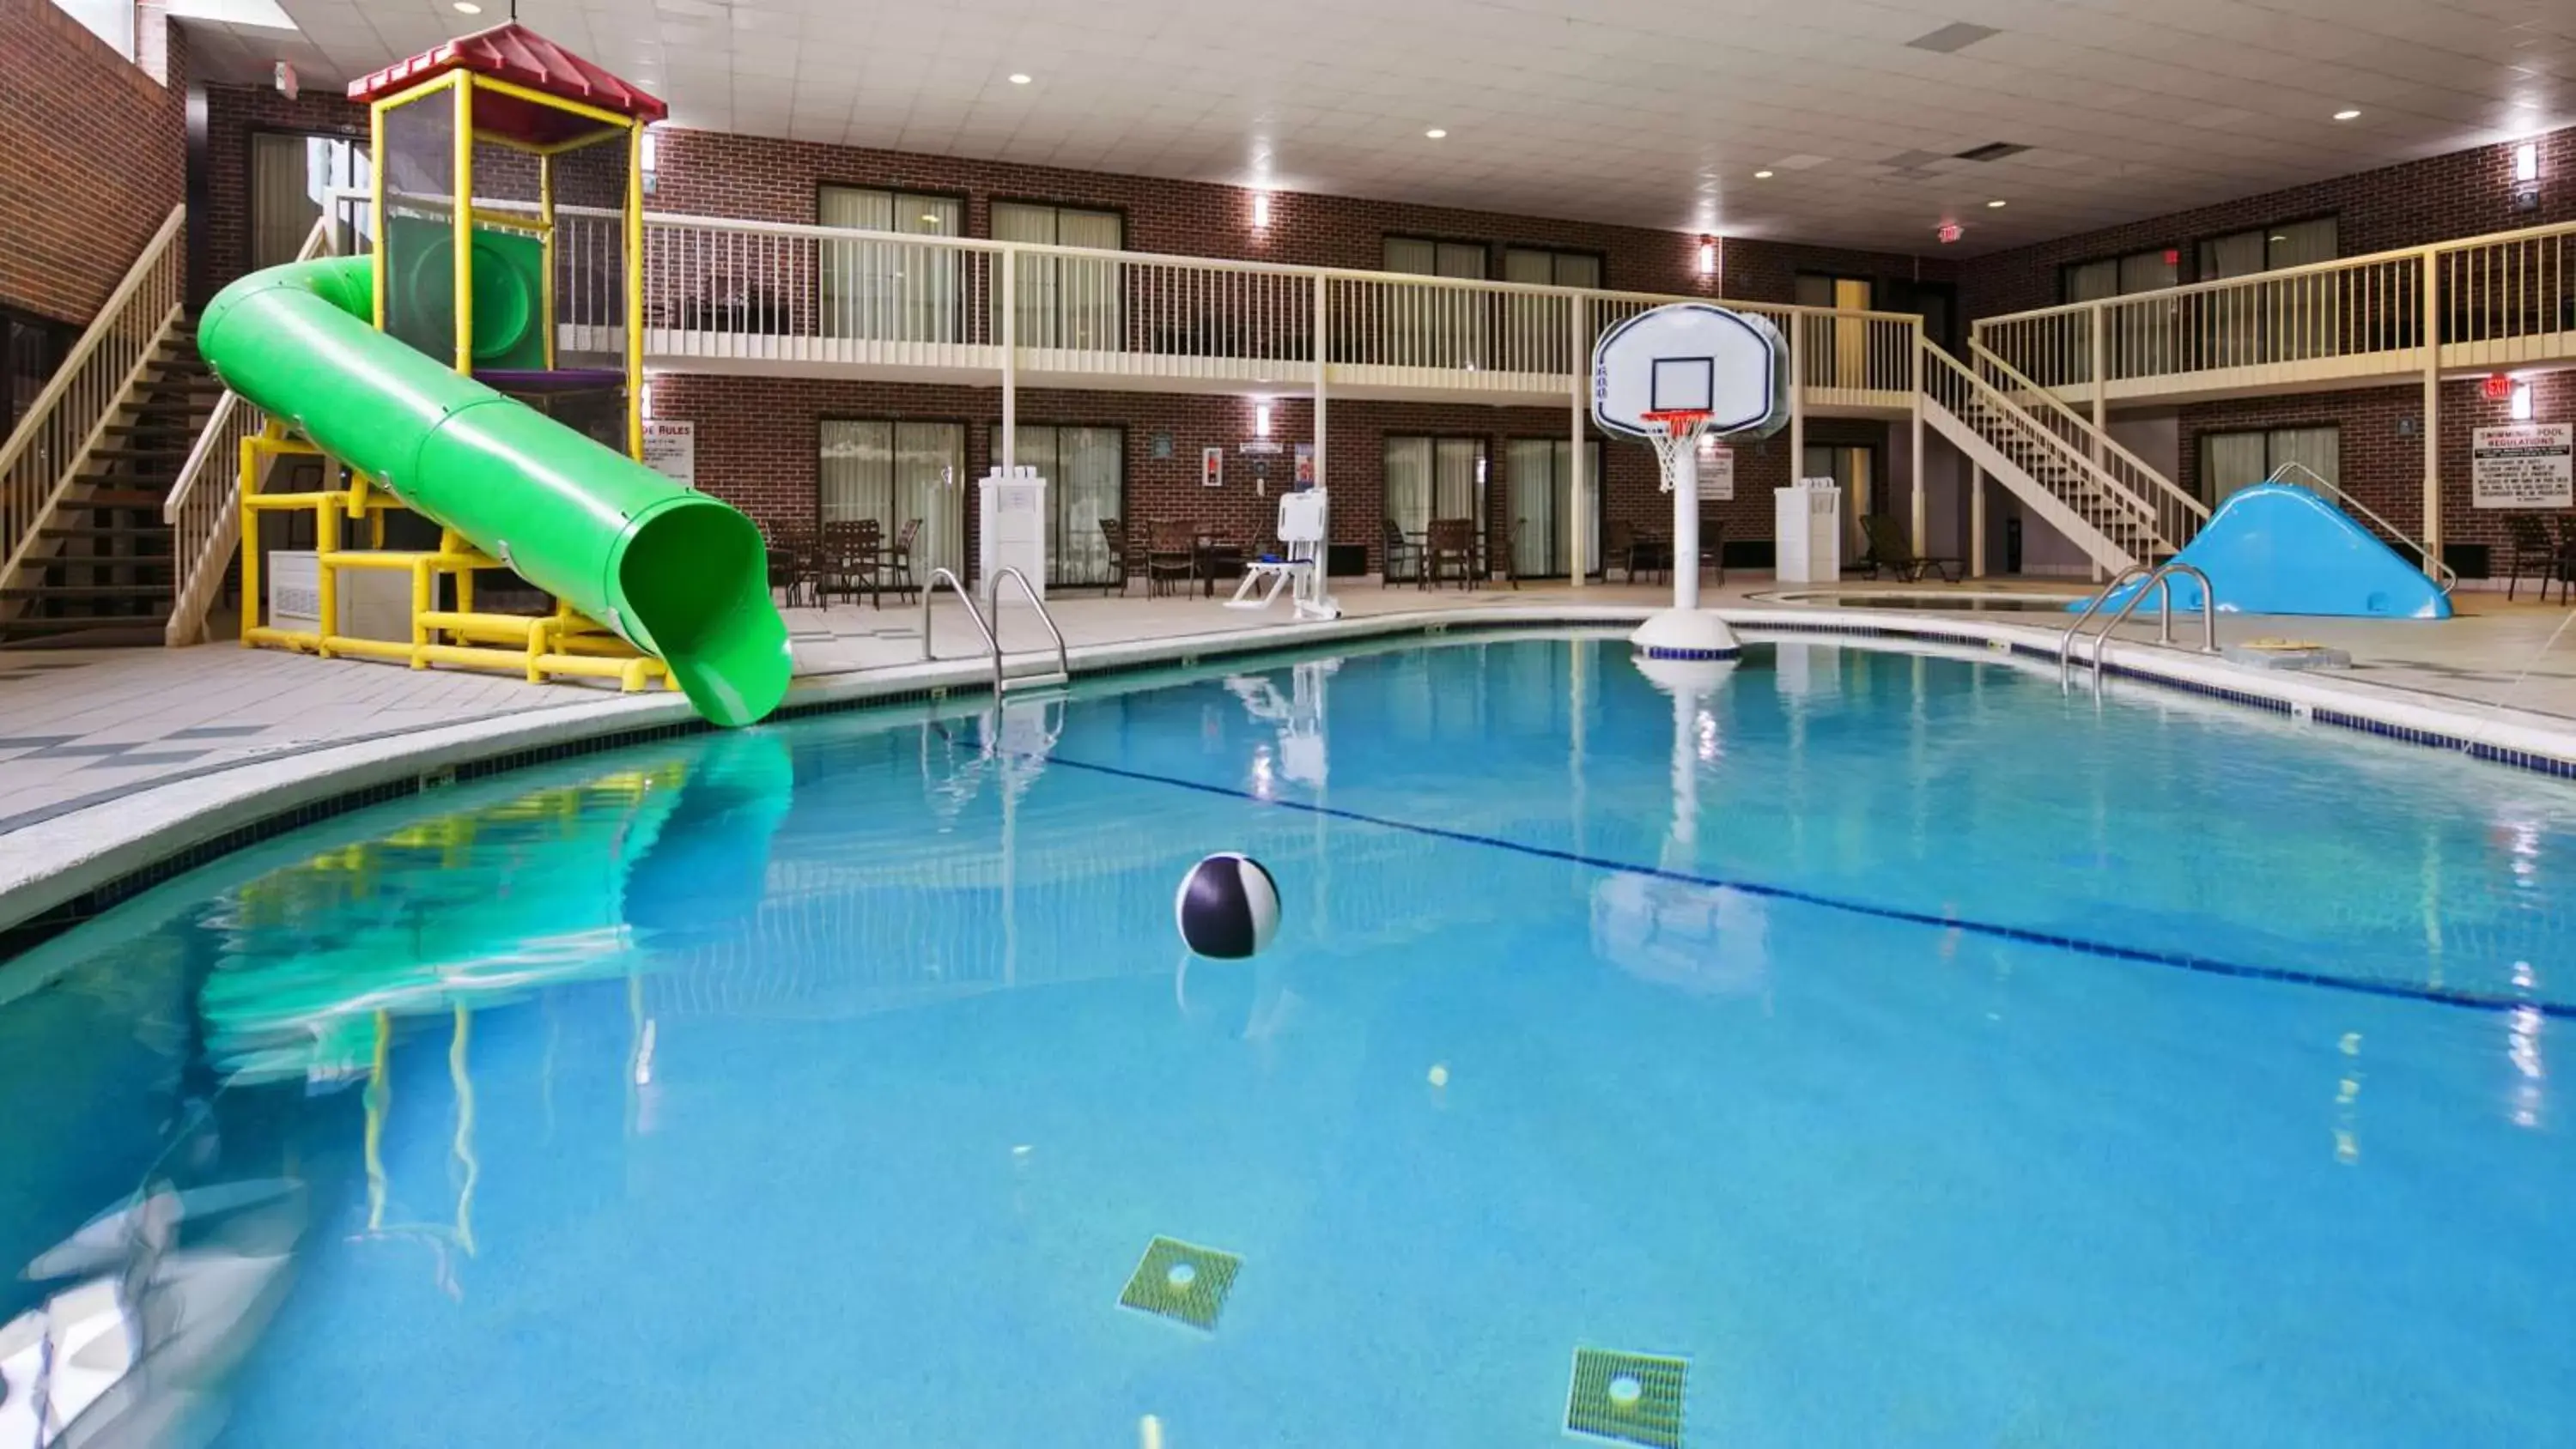 On site, Swimming Pool in Best Western Kelly Inn - Yankton